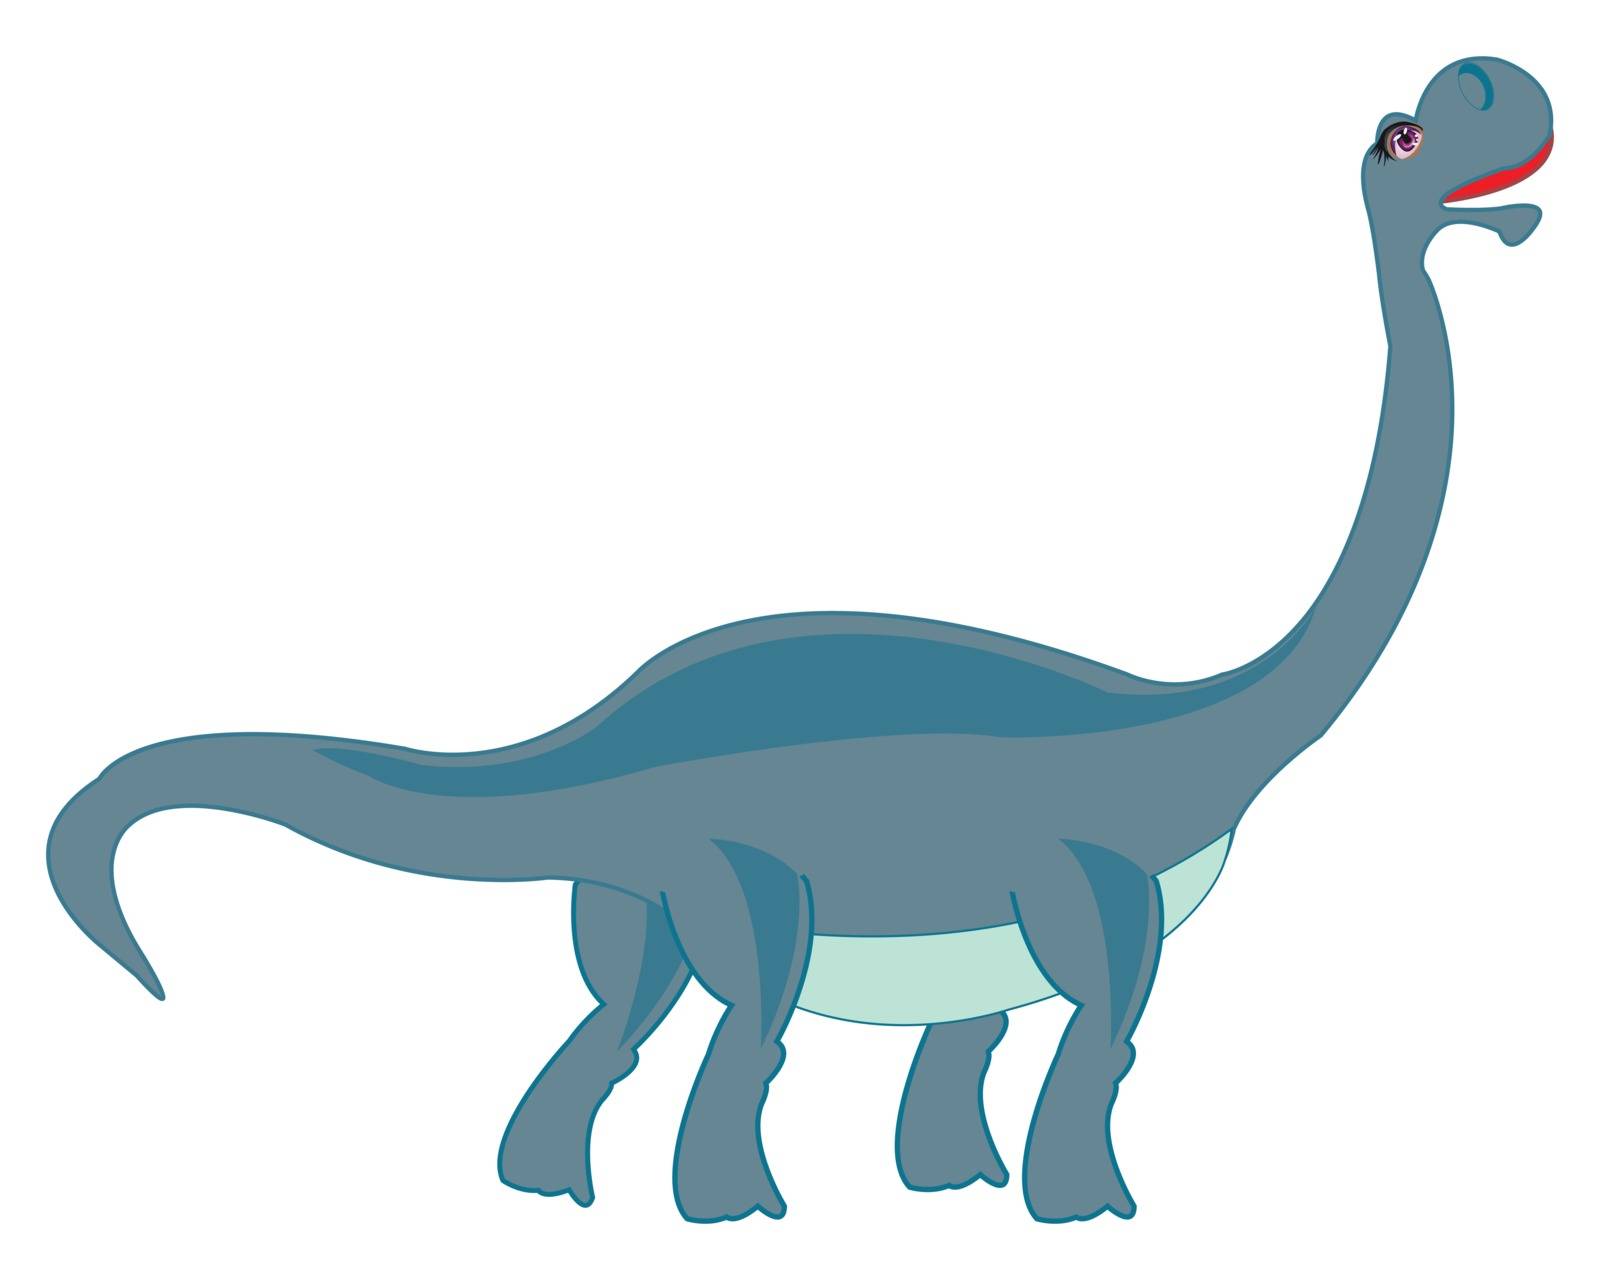 Big herbivorous dinosaur by cobol1964